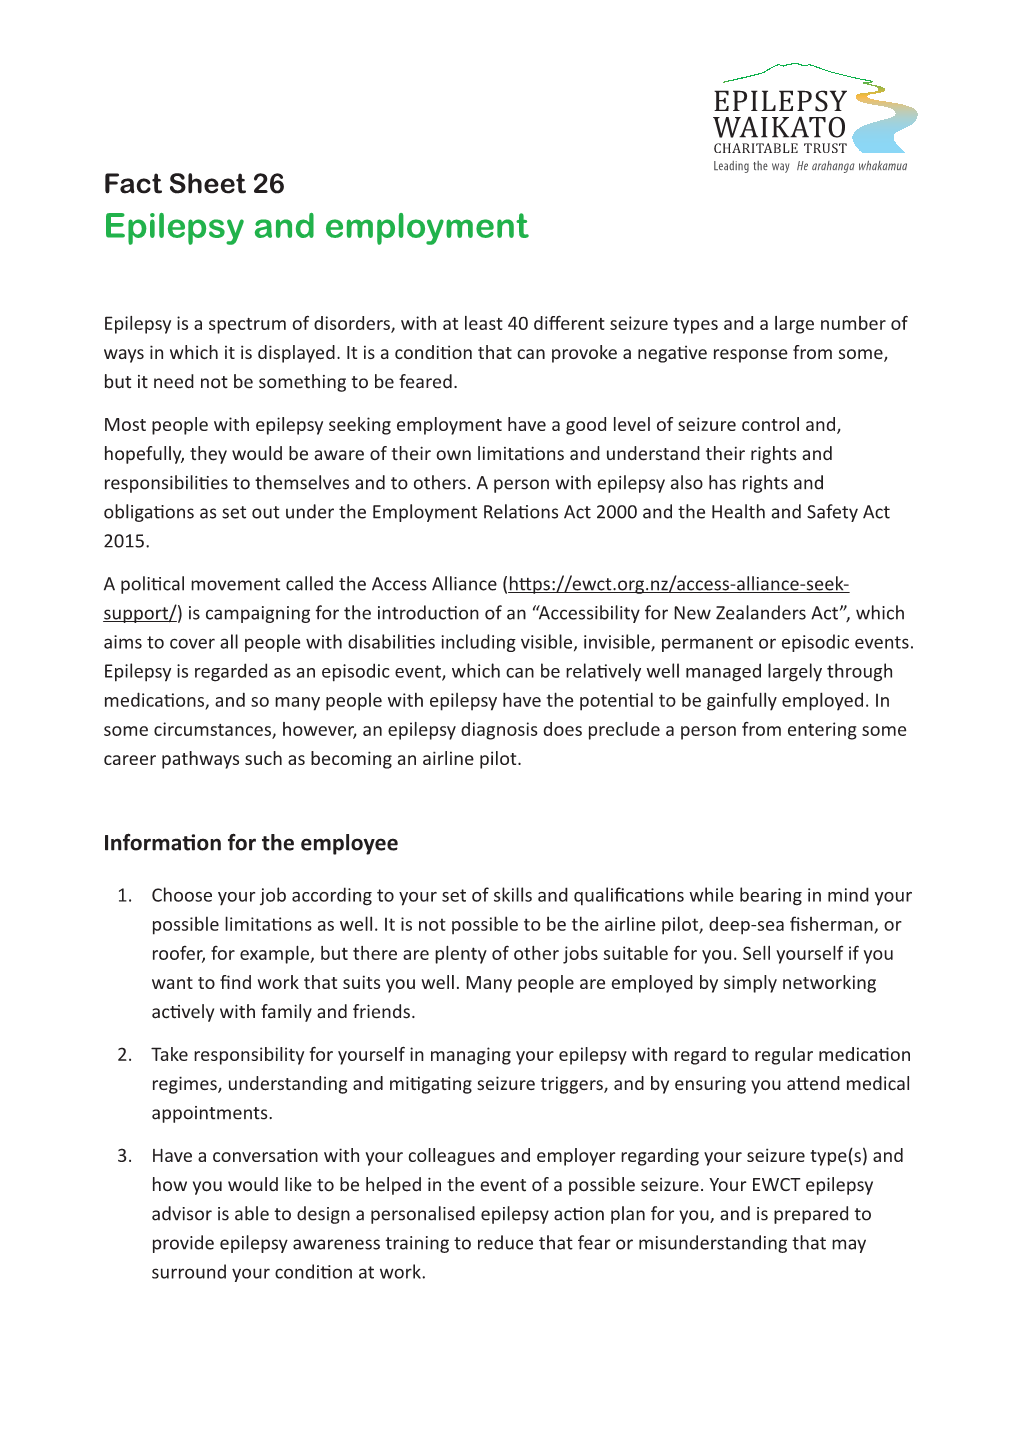 EWCT – Fact Sheet 26 – Epilepsy and Employment